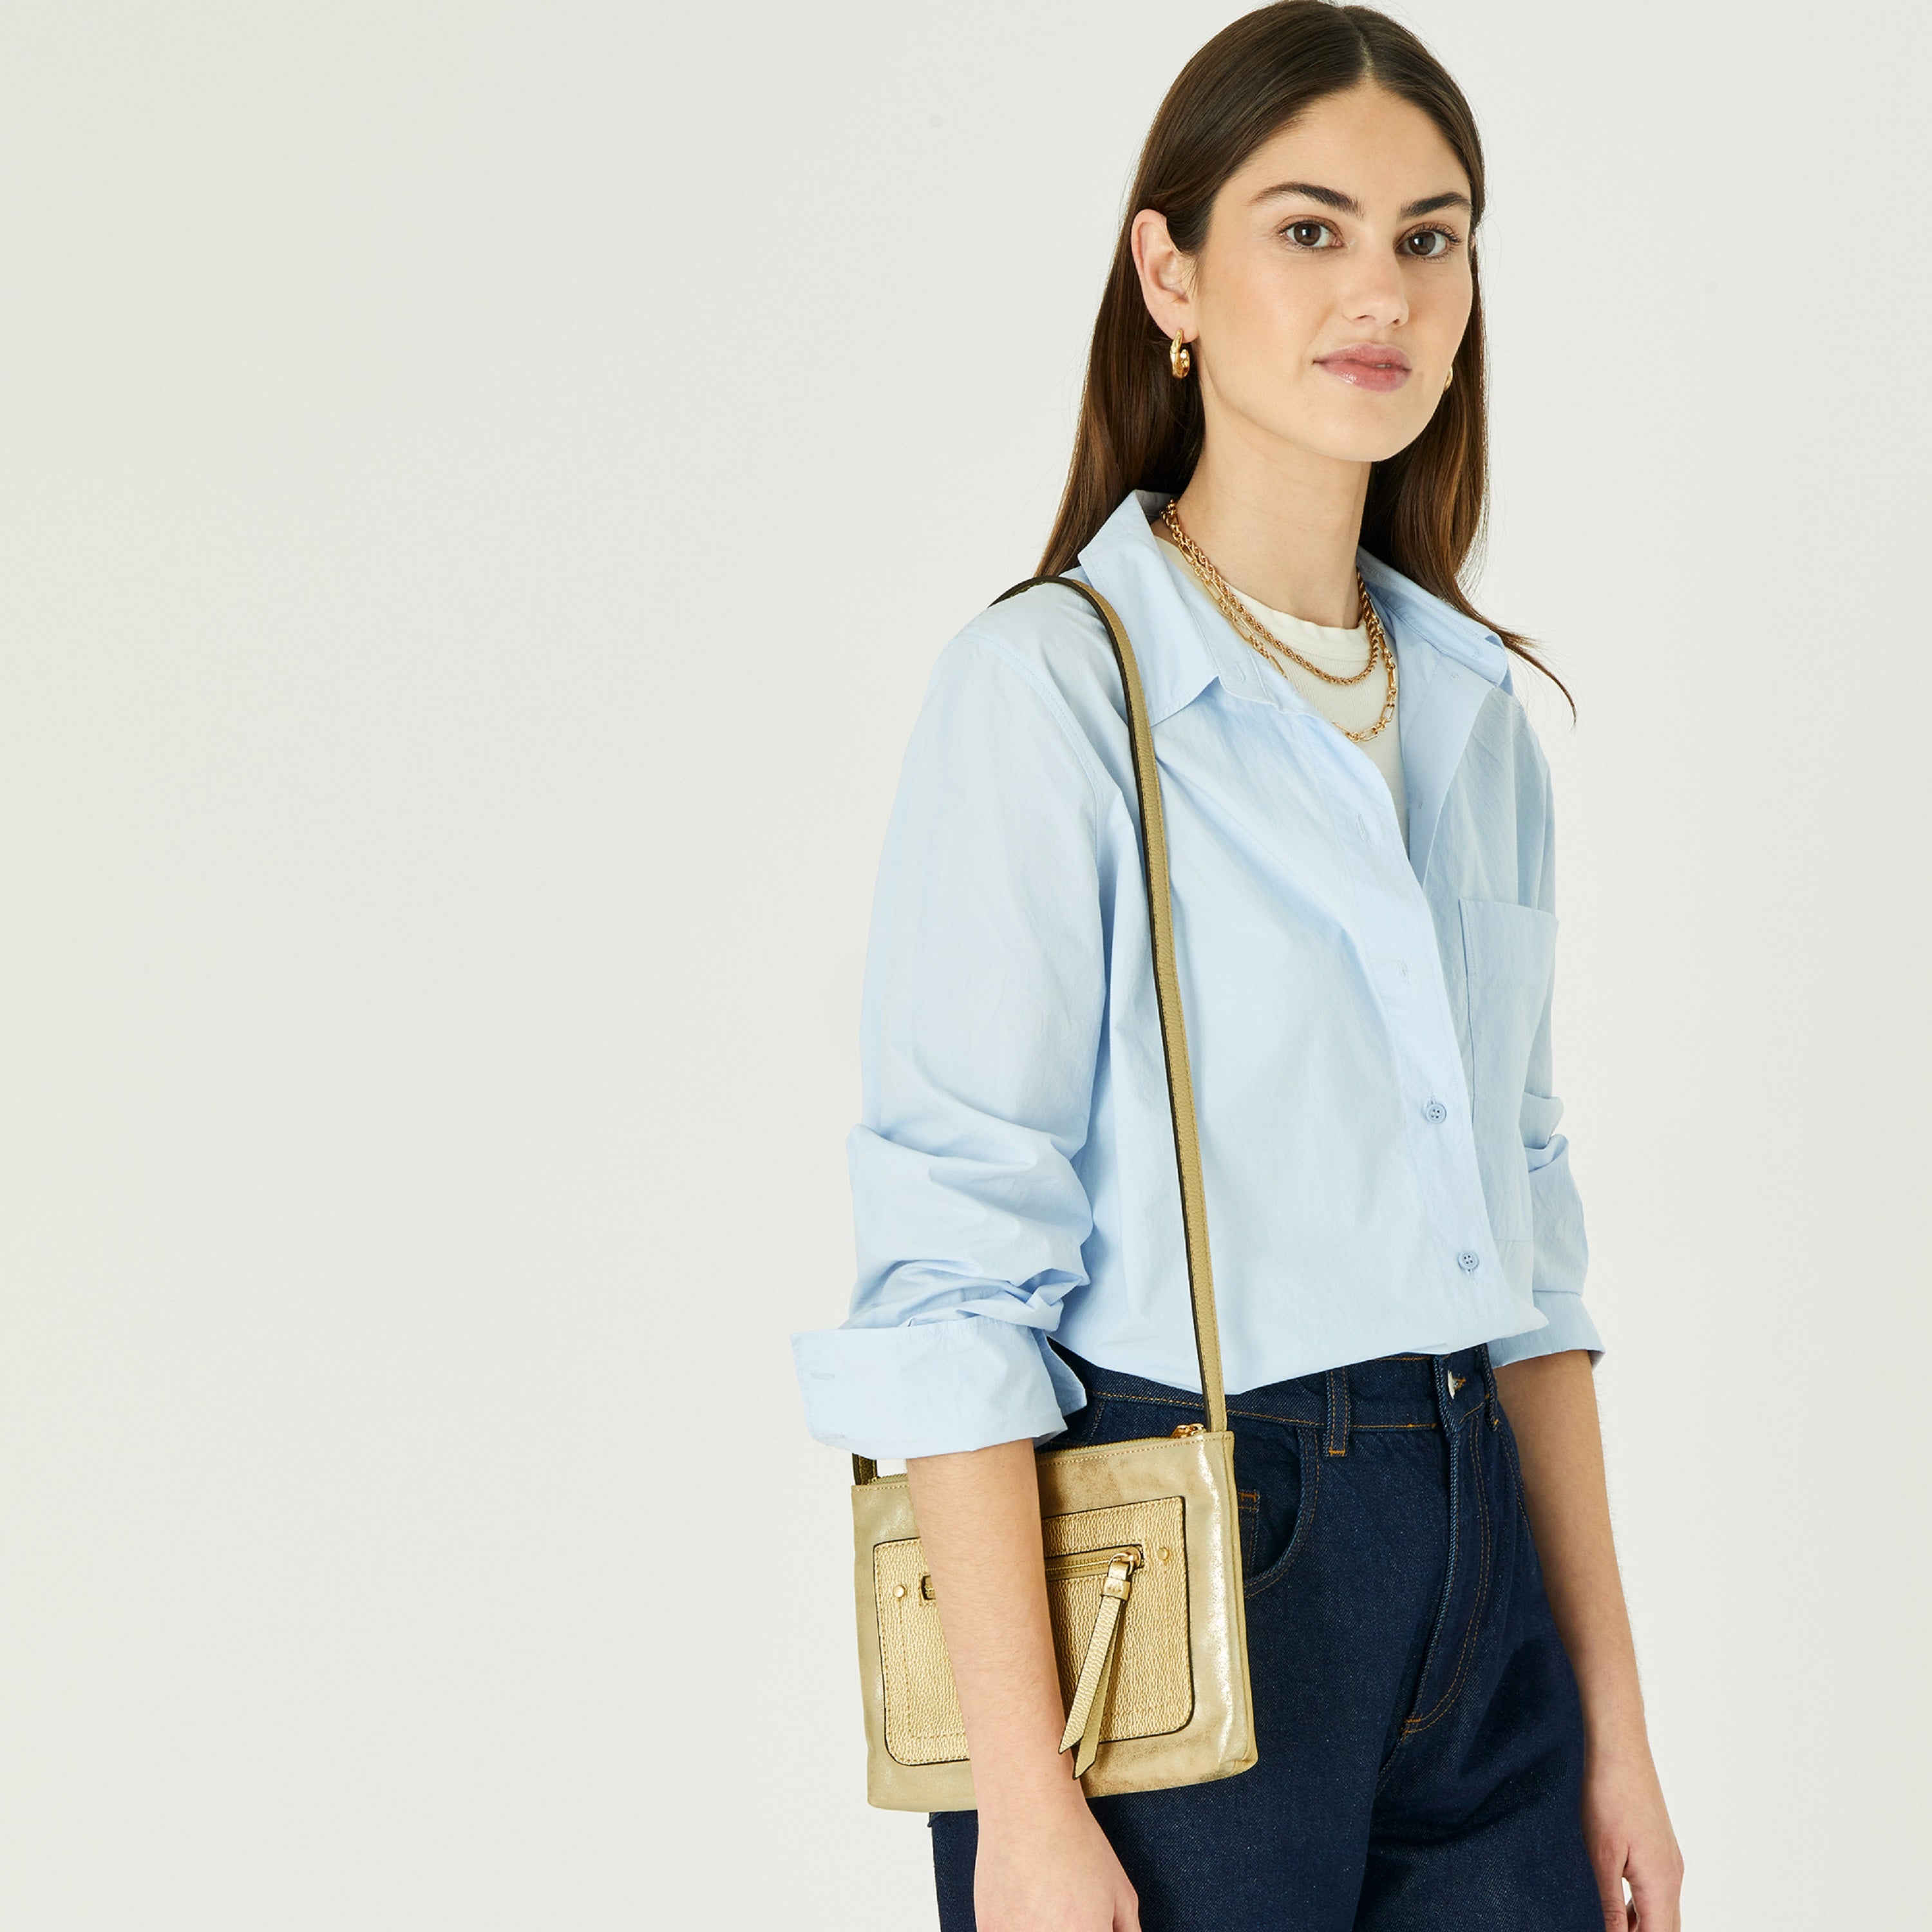 Accessorize London women's Faux Leather Gold Ella Messenger Sling bag